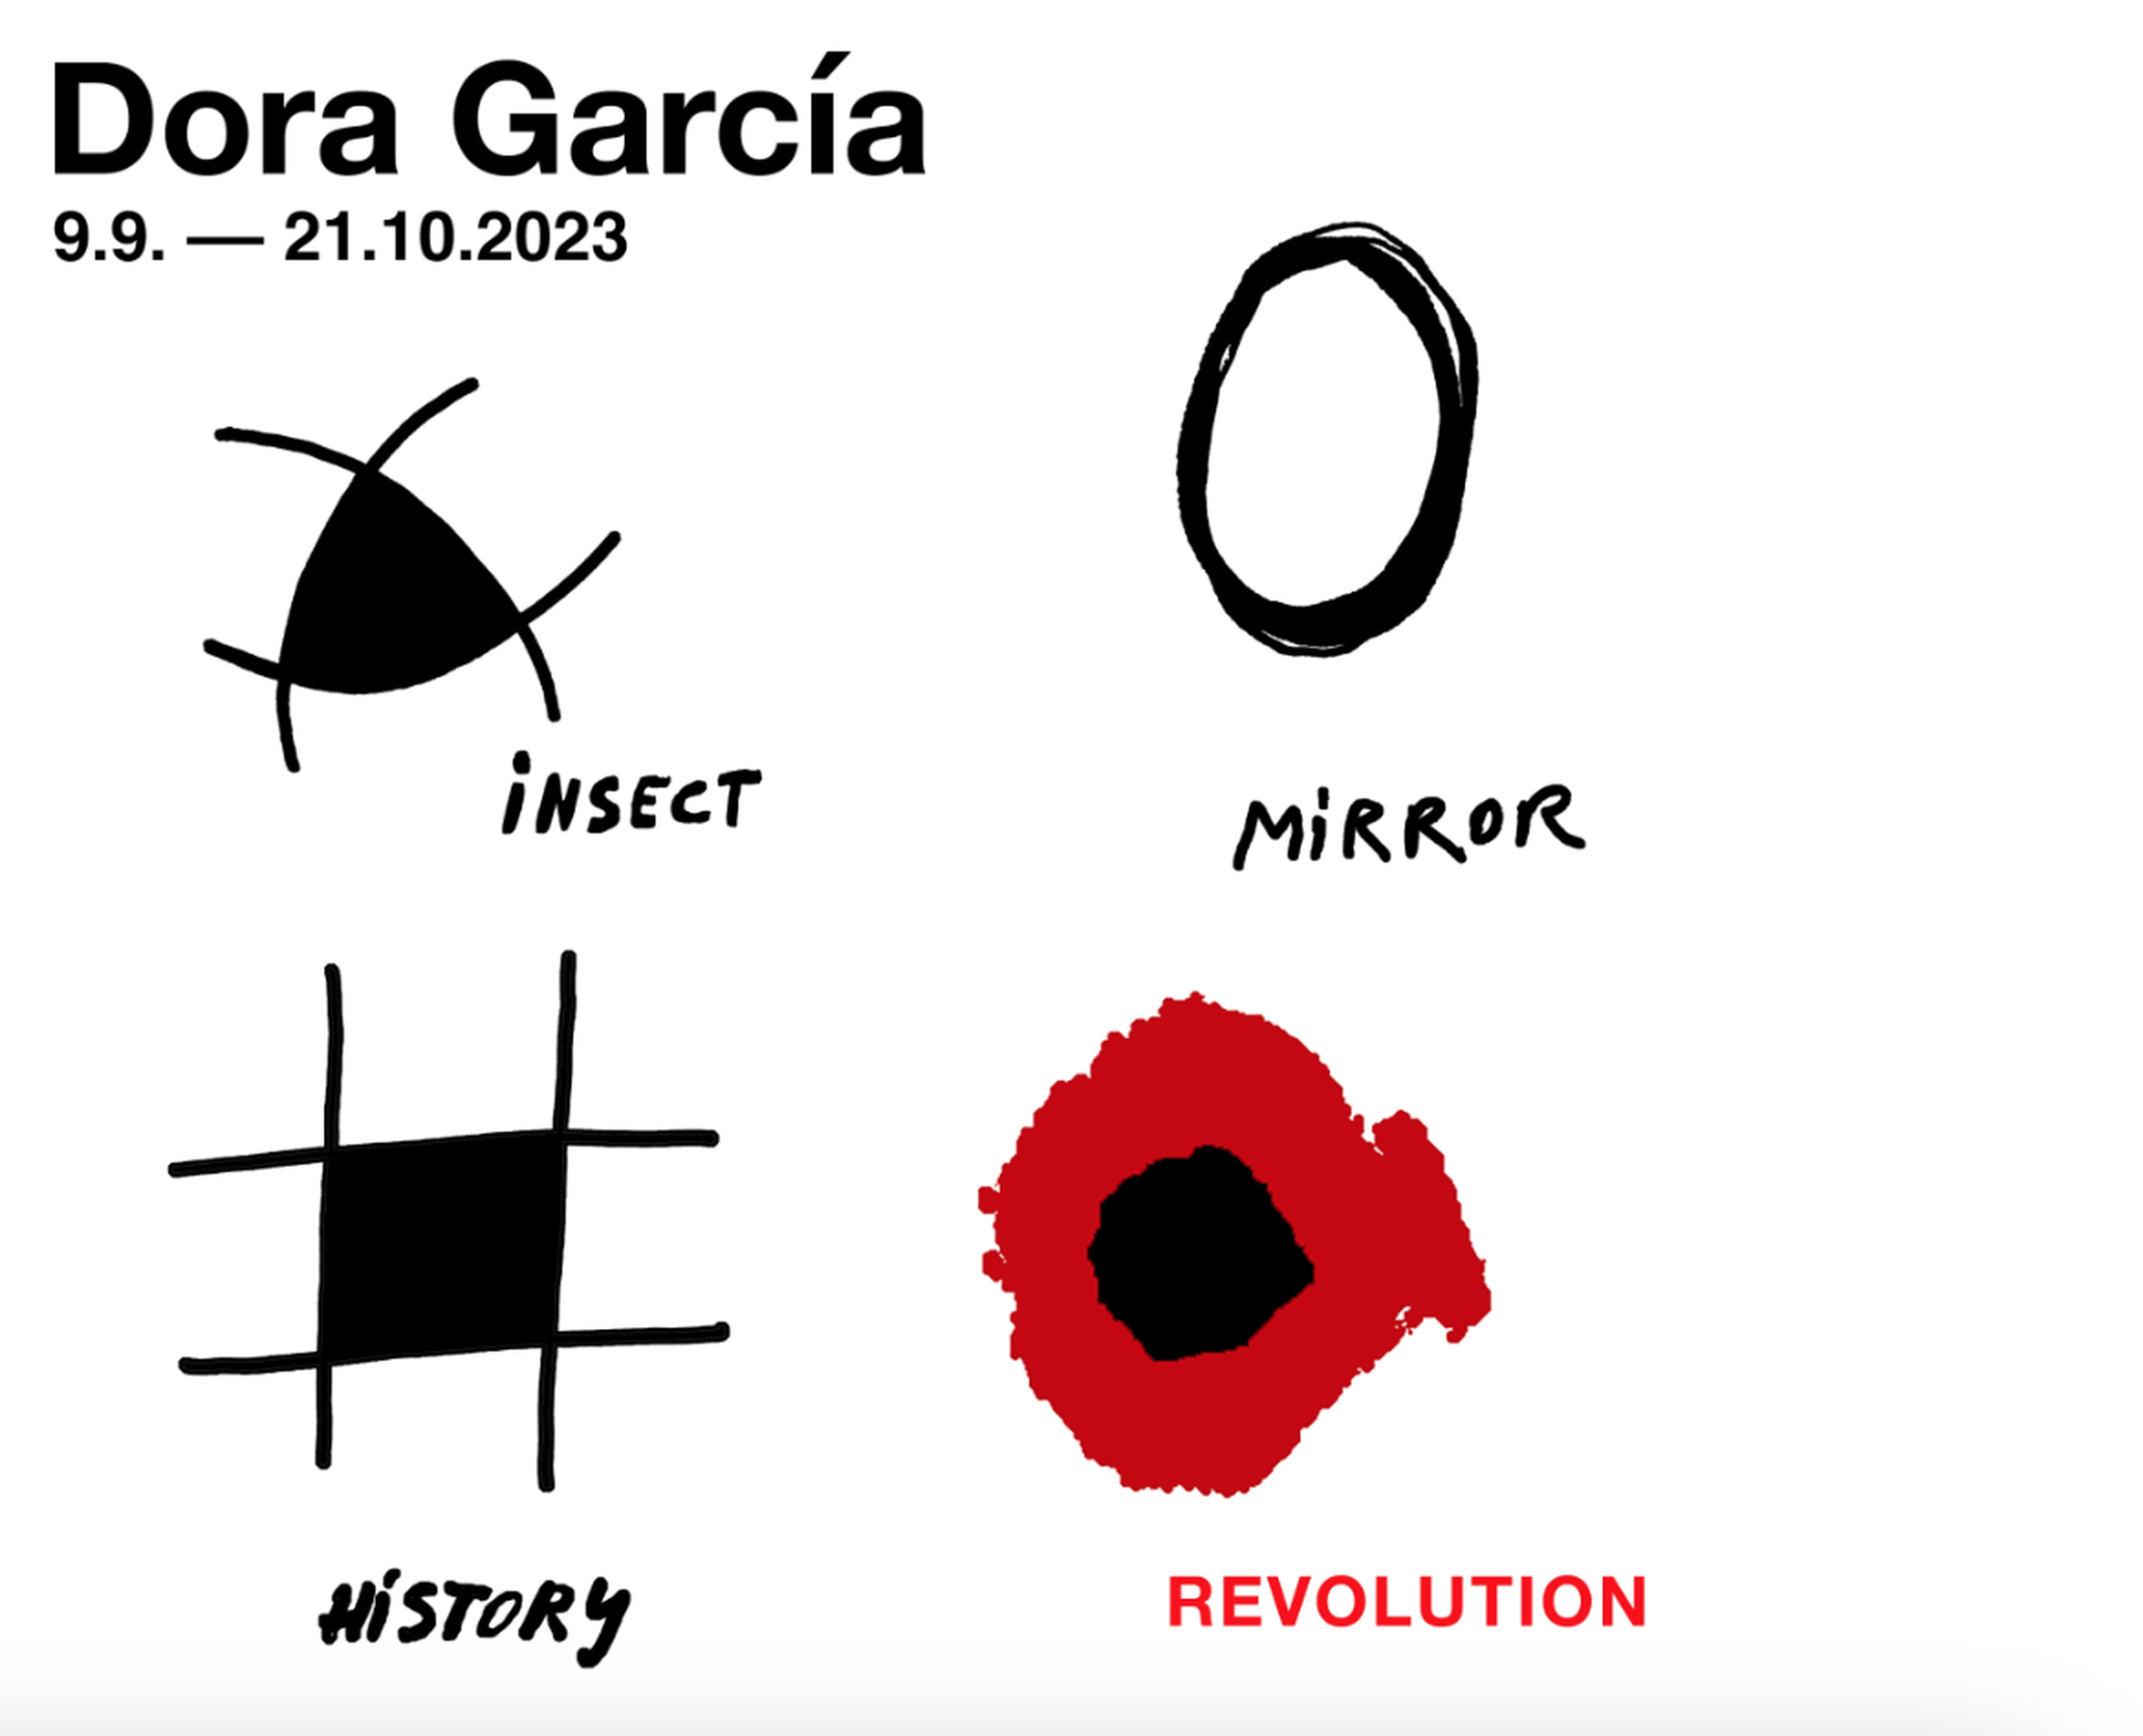 Dora García | Insect, history, mirror, revolution